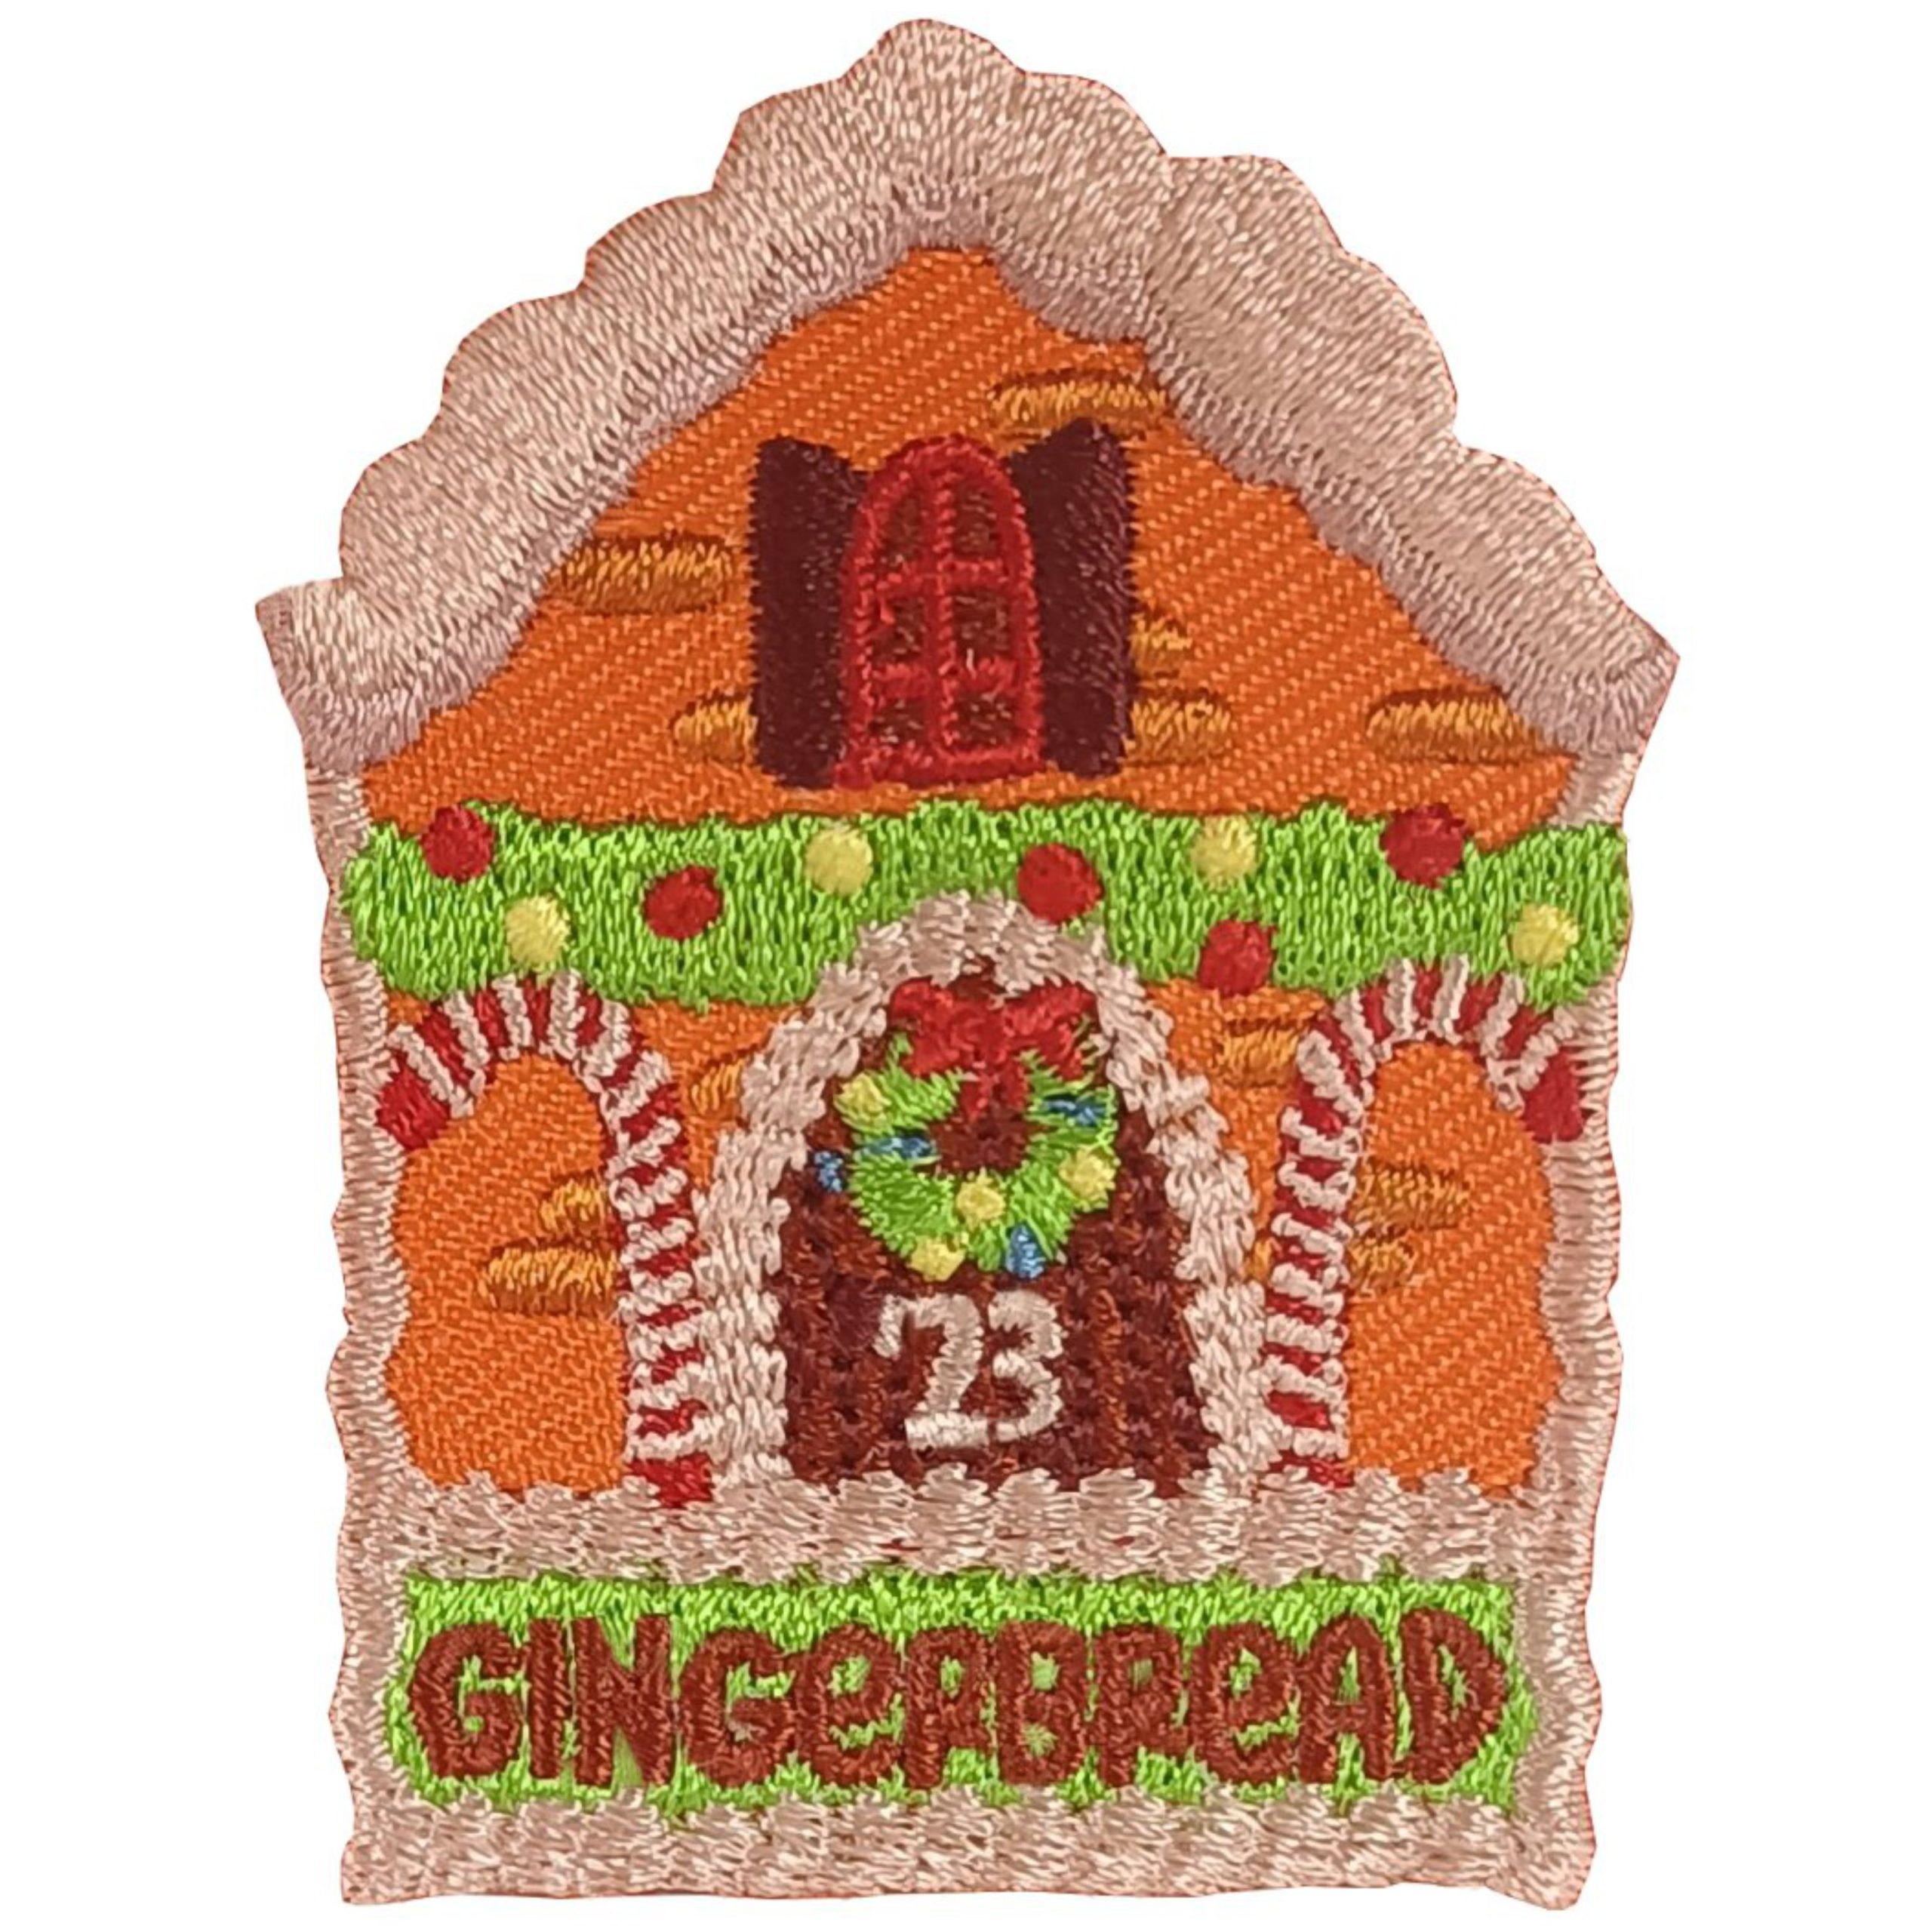 Girl Scout Gingerbread fun patch